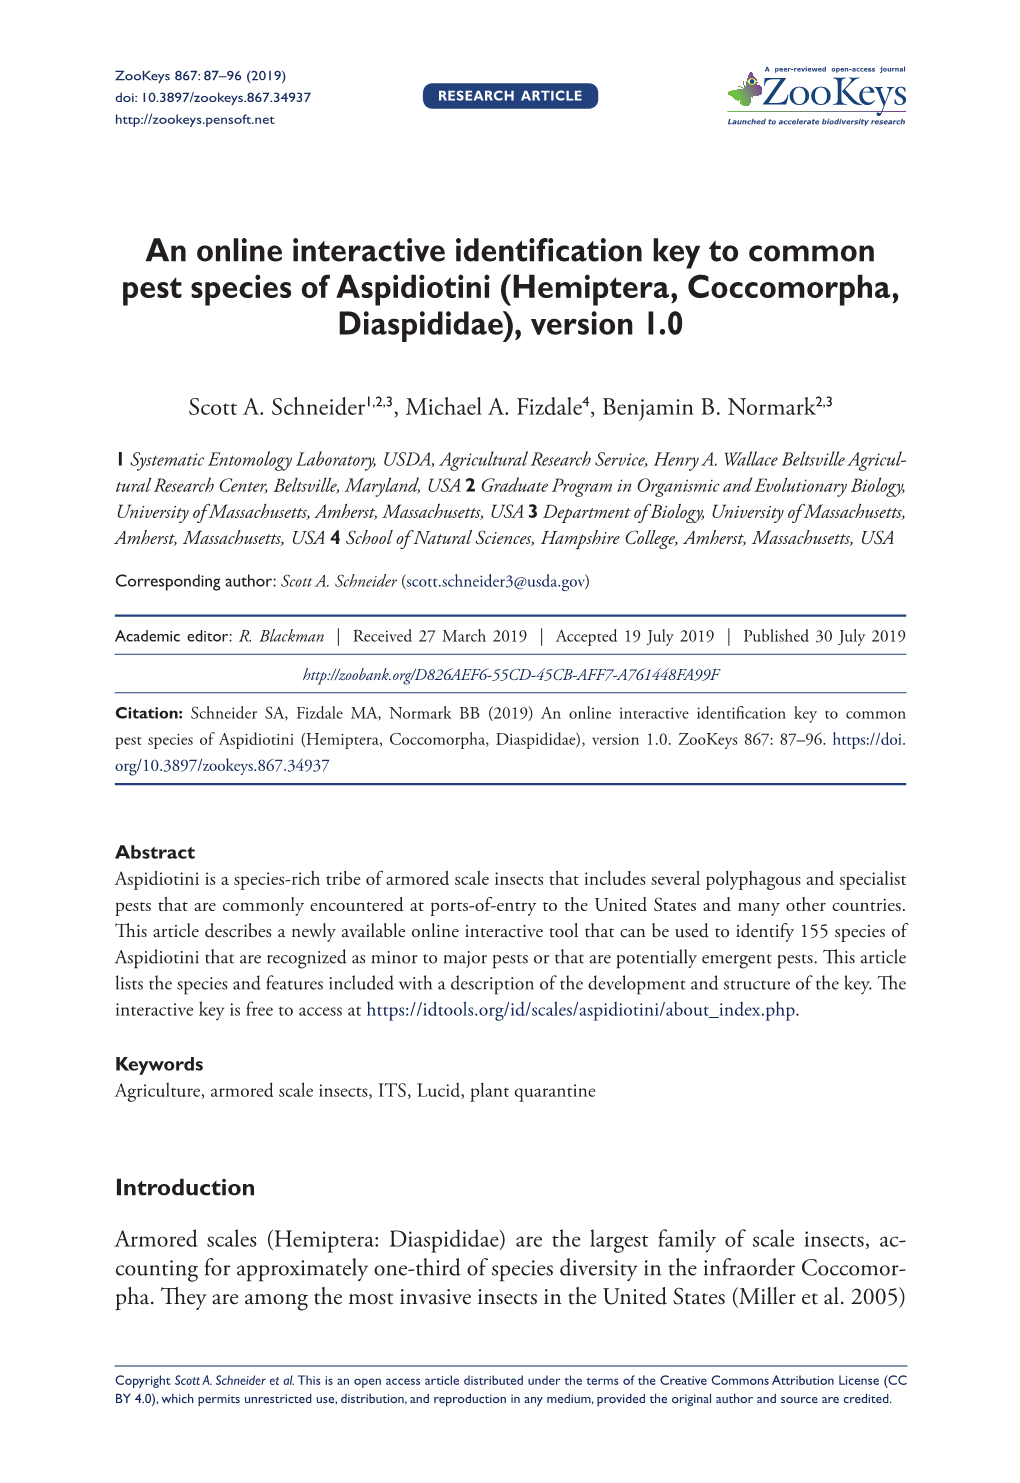 An Online Interactive Identification Key to Common Pest Species of Aspidiotini (Hemiptera, Coccomorpha, Diaspididae), Version 1.0